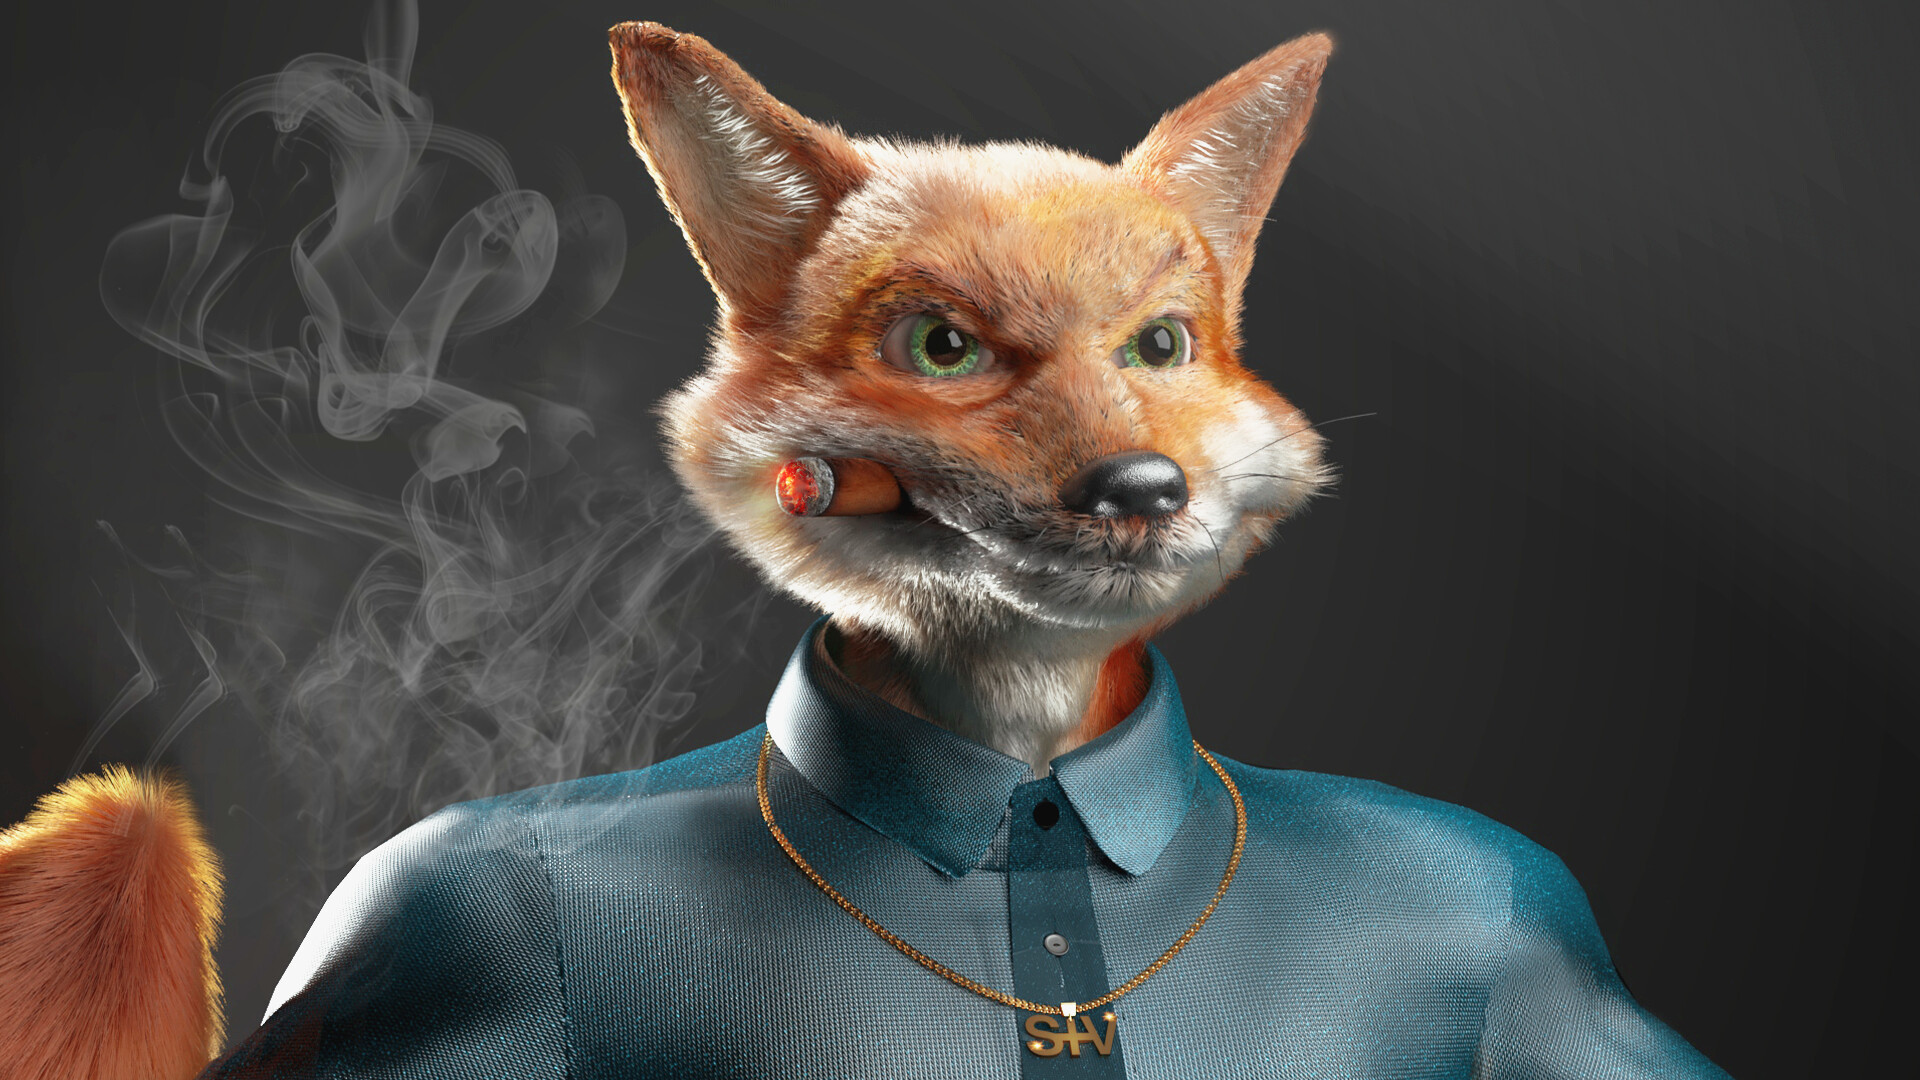 ArtStation - Lucky foxter, character portrait